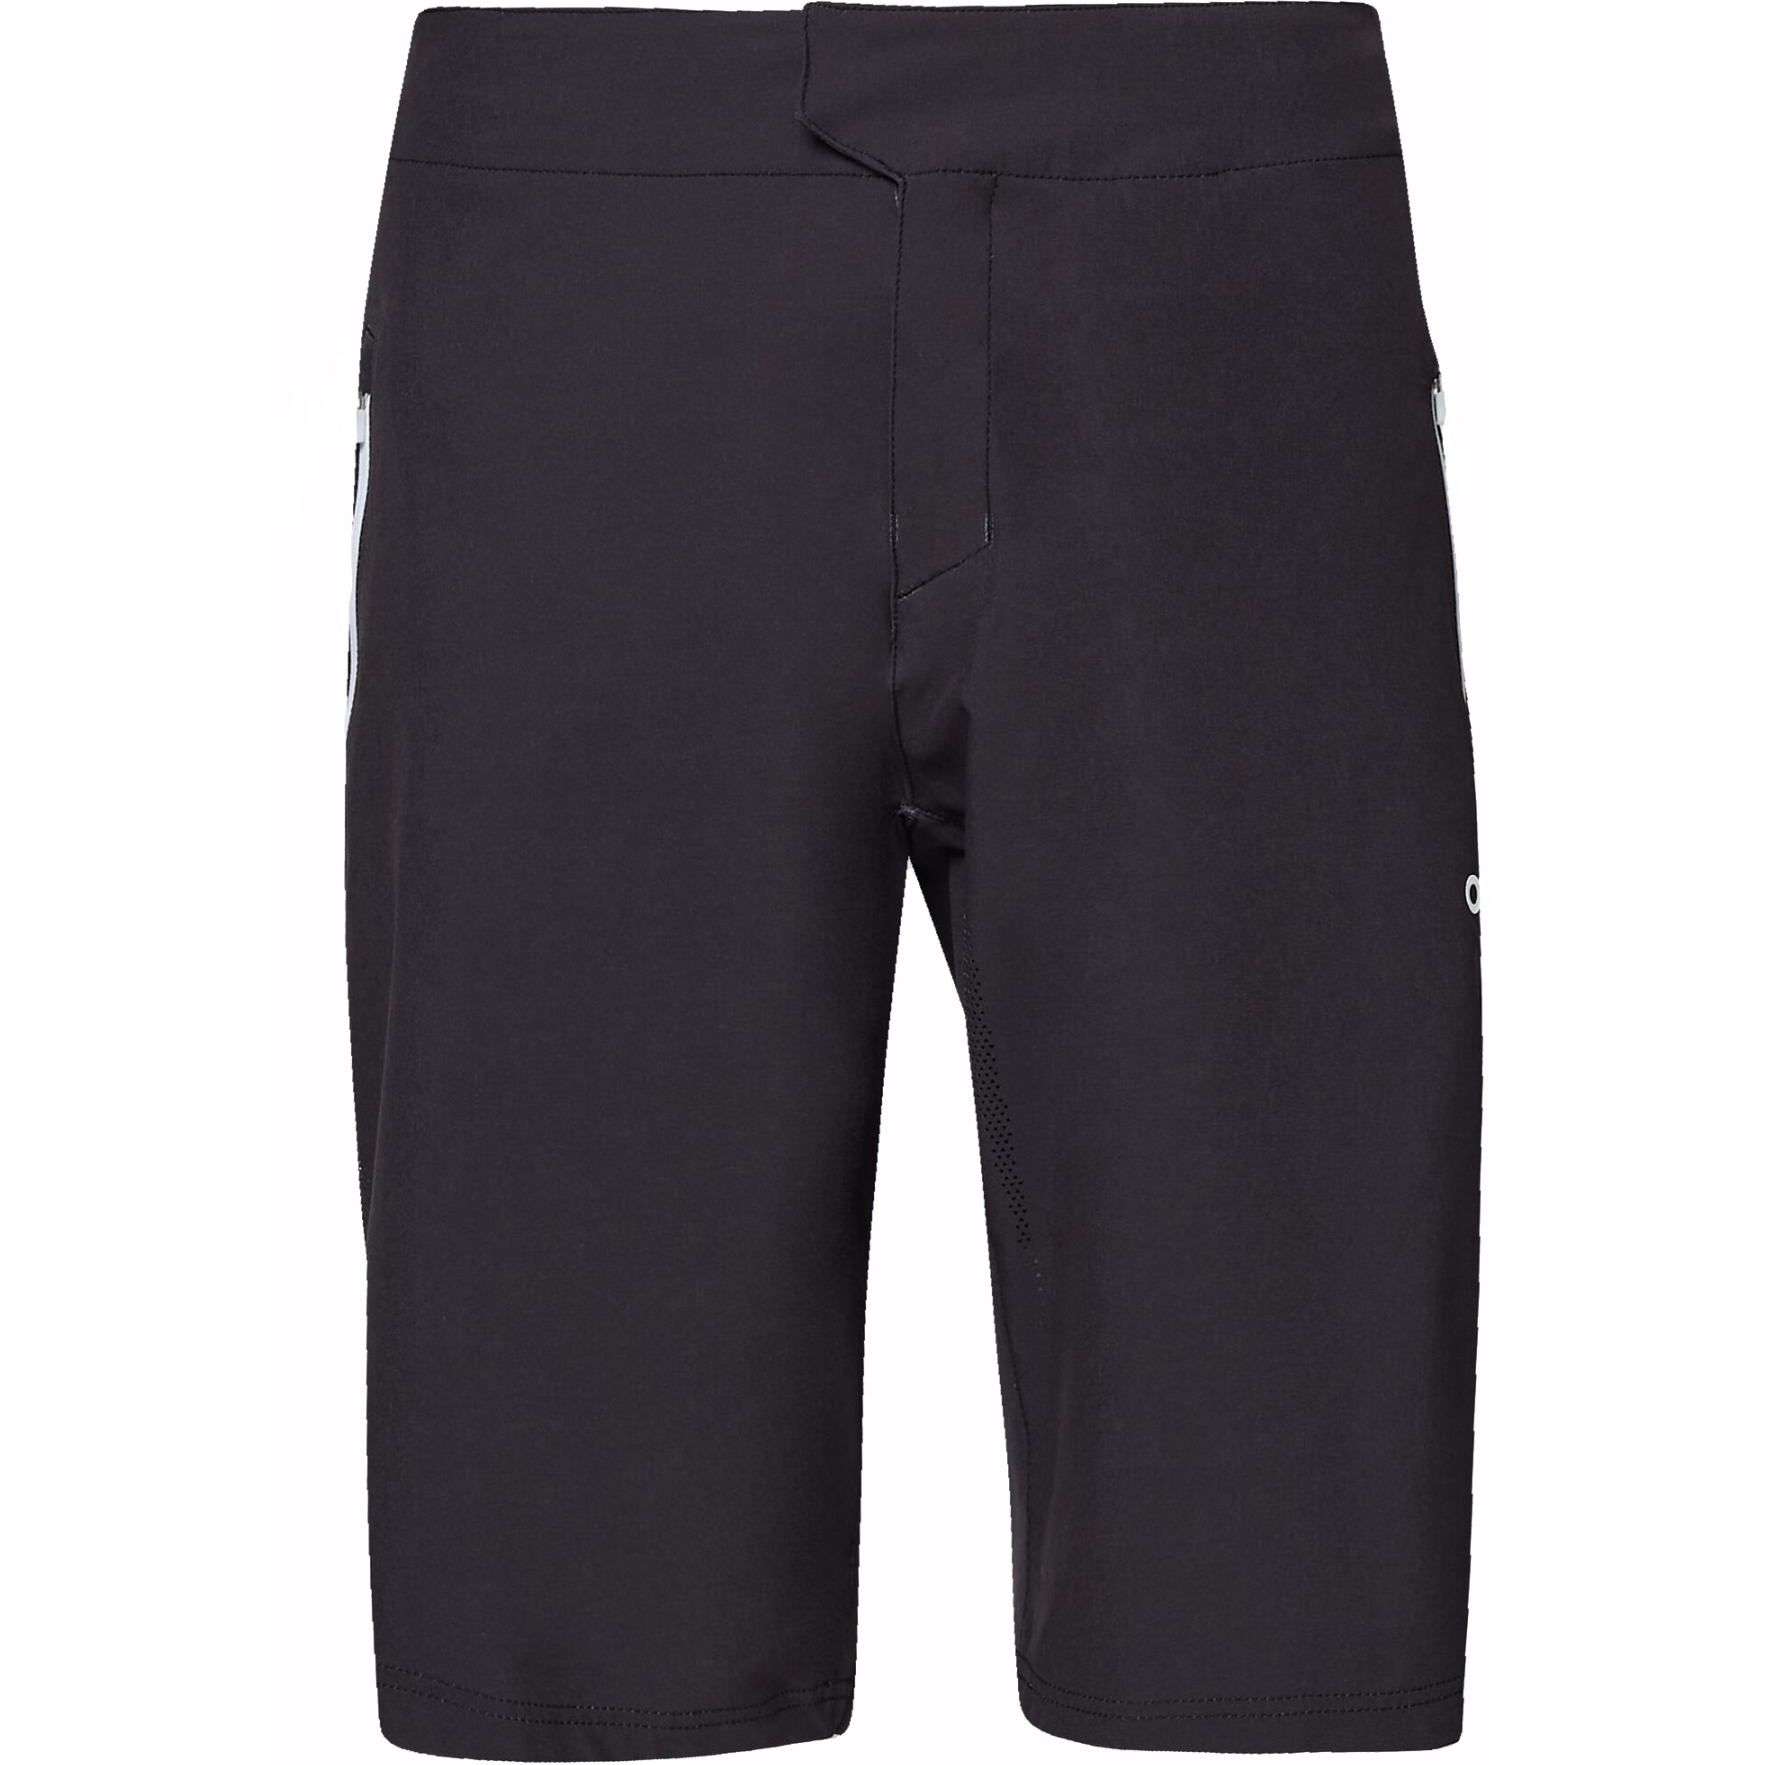 Oakley Reduct Berm Shorts Men - Blackout | BIKE24